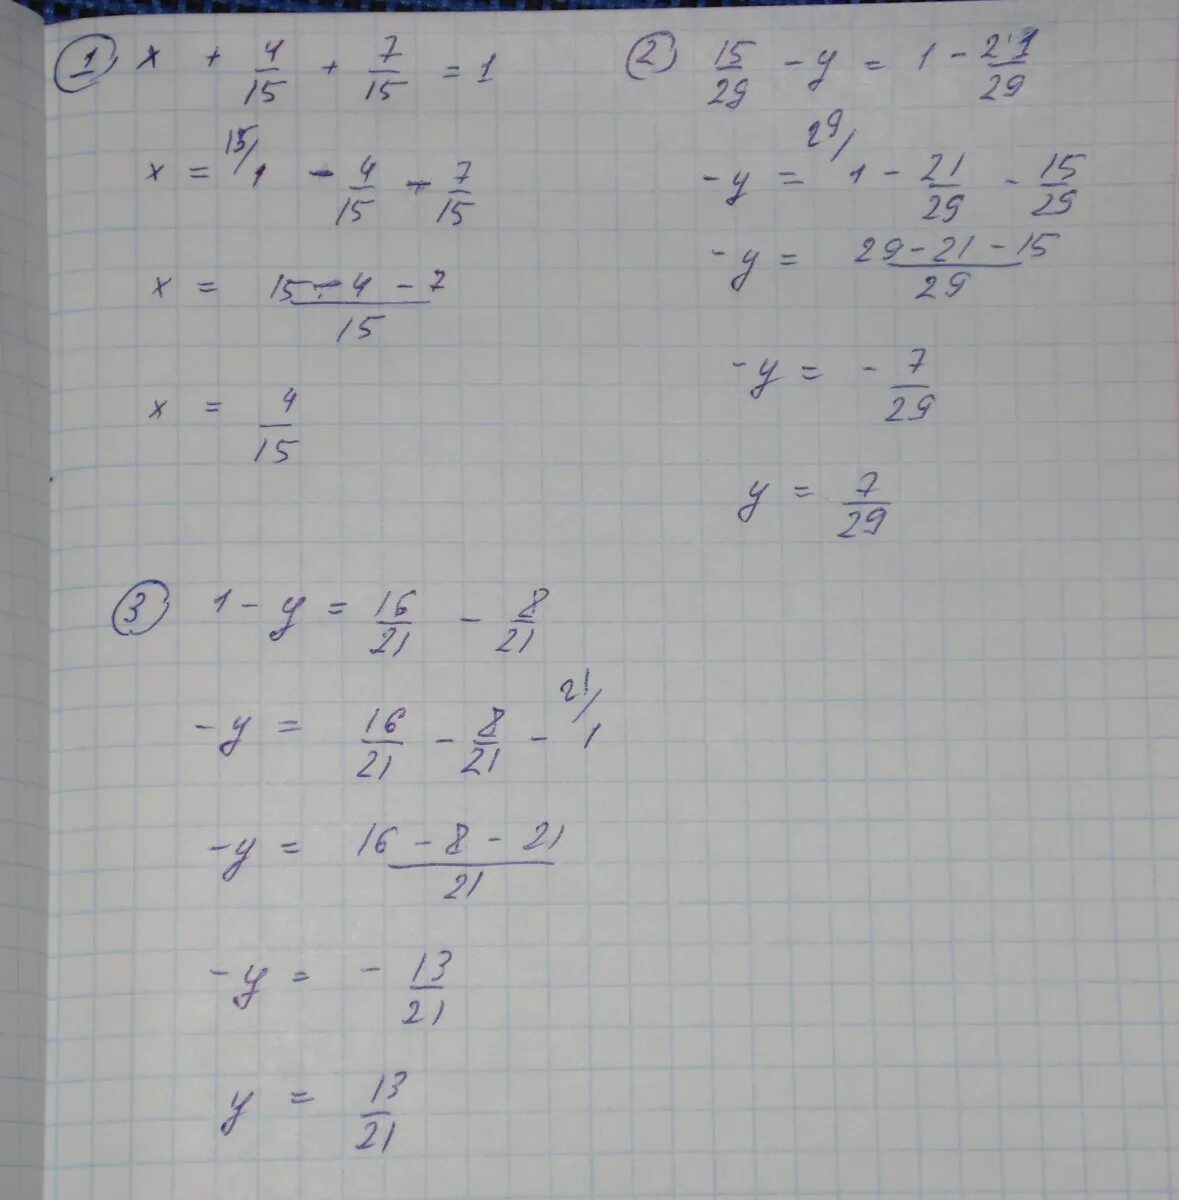 4x 1 13 решение. Х:7+15=15. Решение уравнения 15х-8х=21. Решение уравнения 1/4*x=1 1/7. Решение уравнения 16-x=.